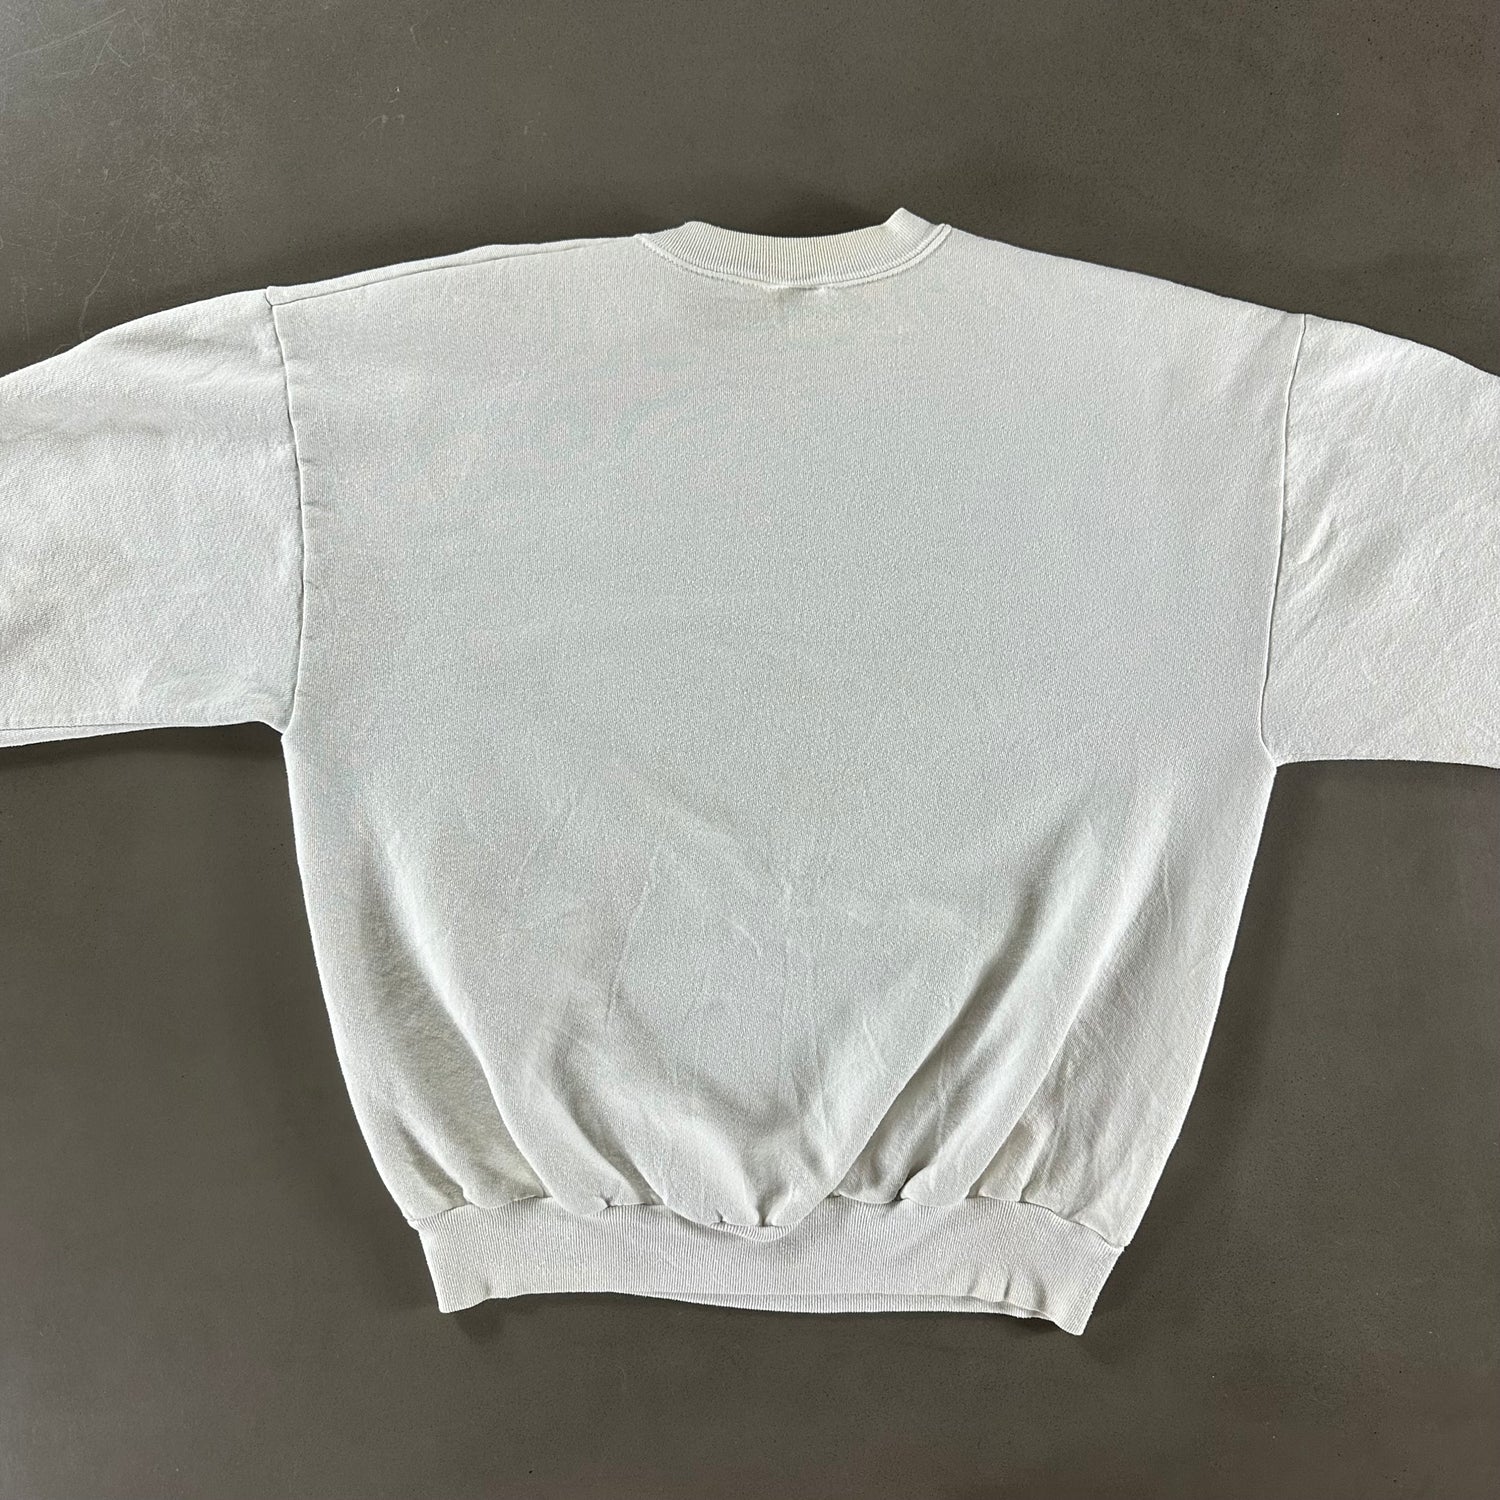 Vintage 1990s Team Napa Sweatshirt size XL